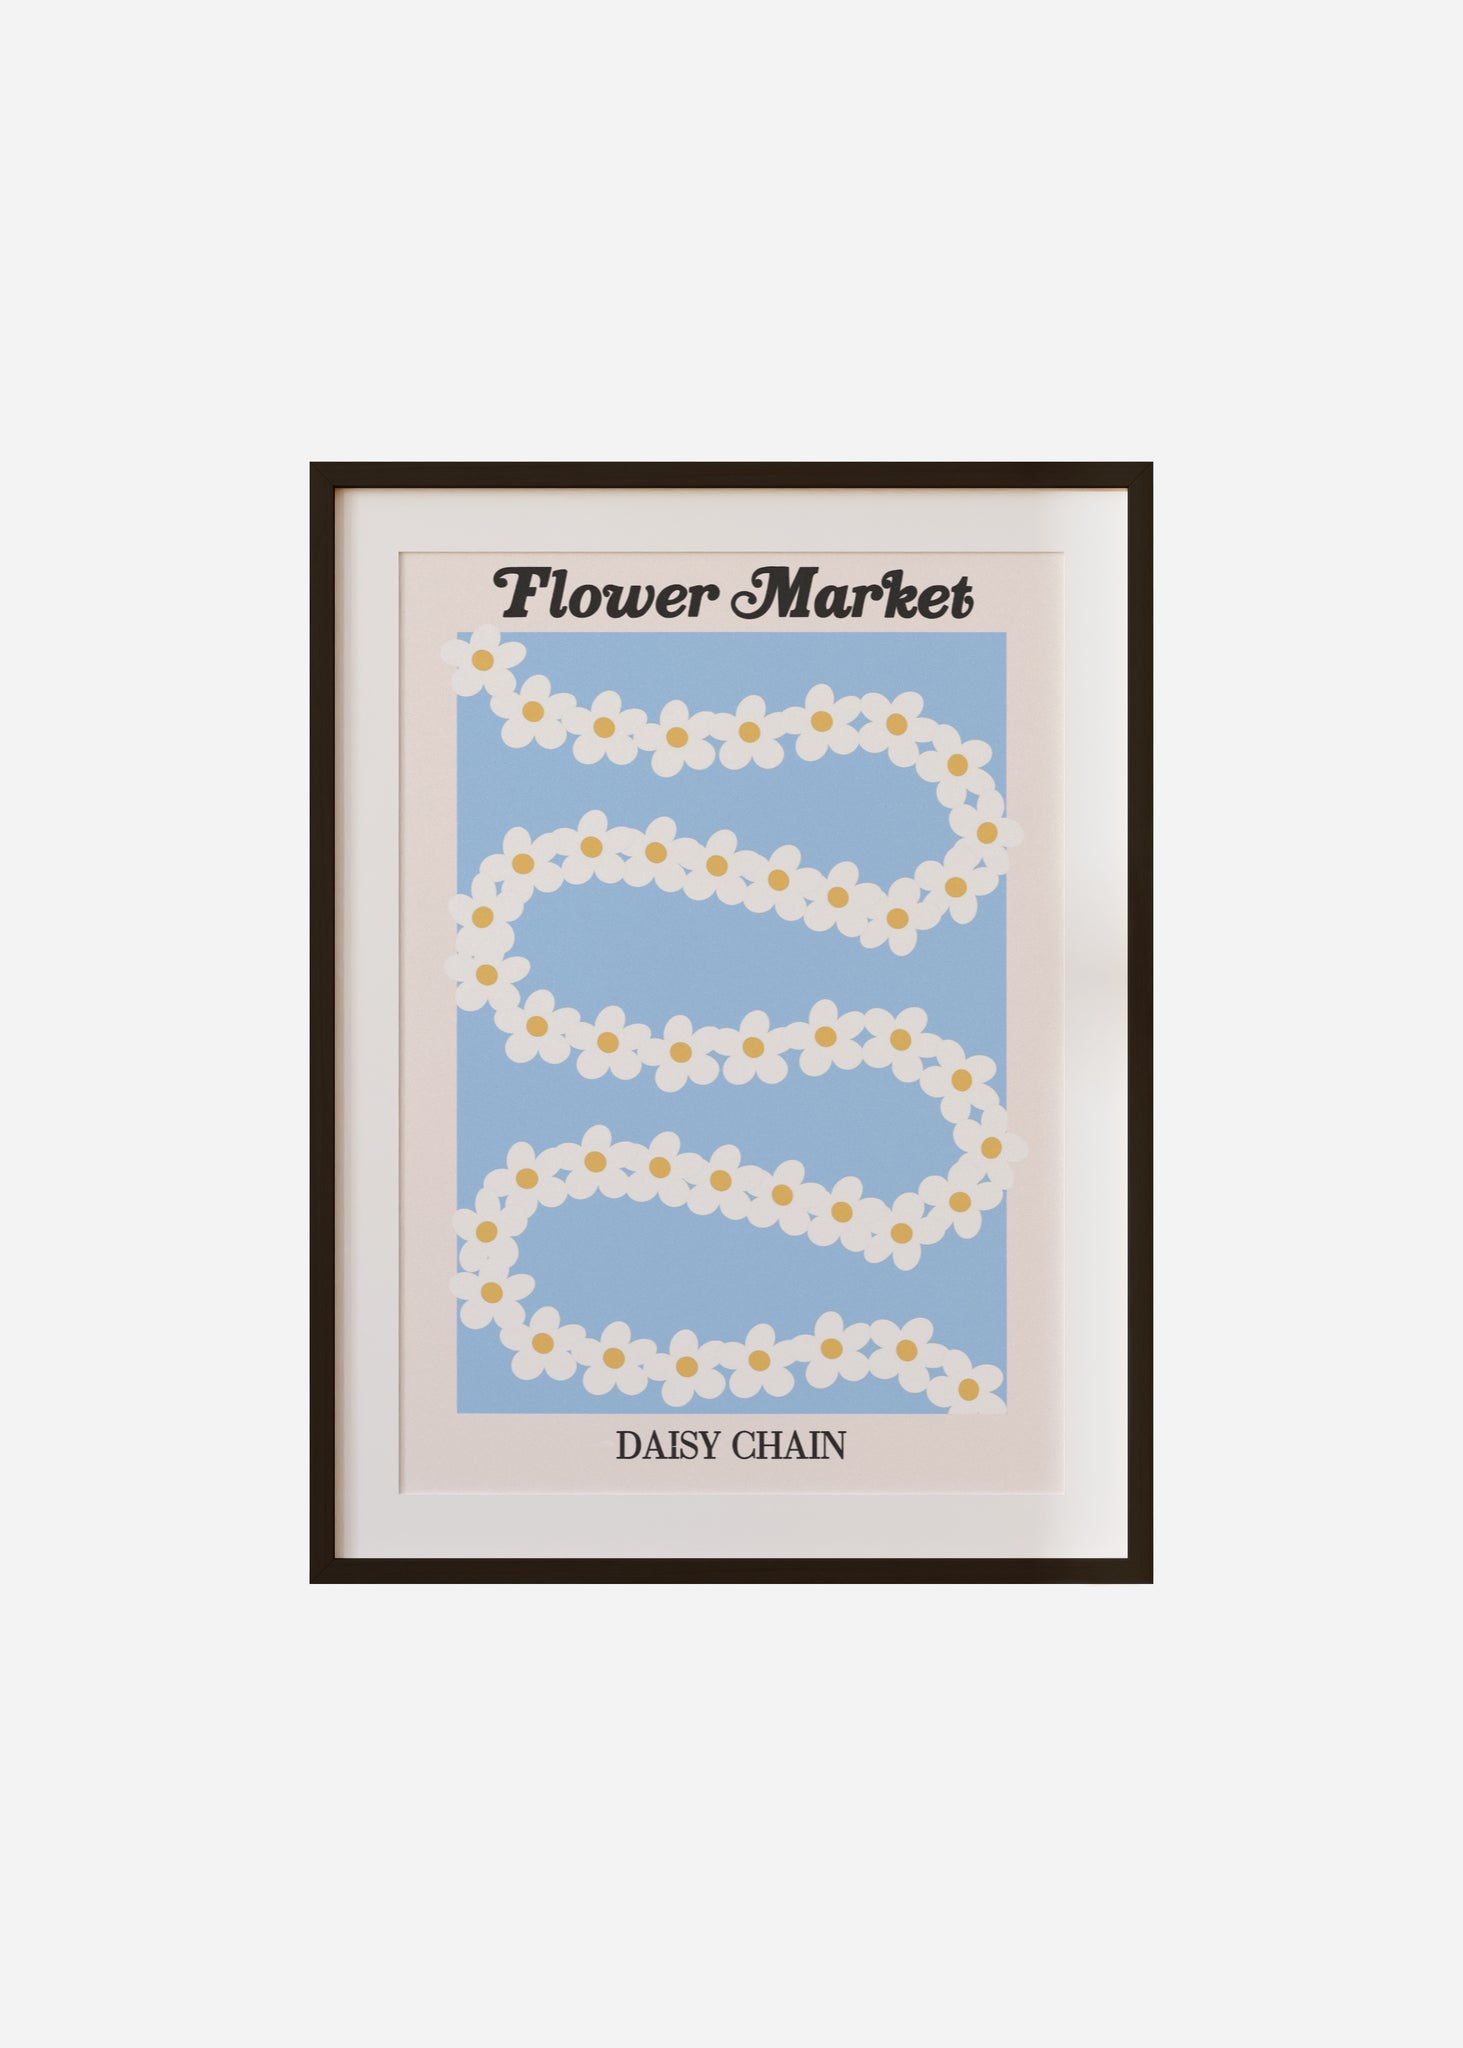 flower market / daisy chain Framed & Mounted Print